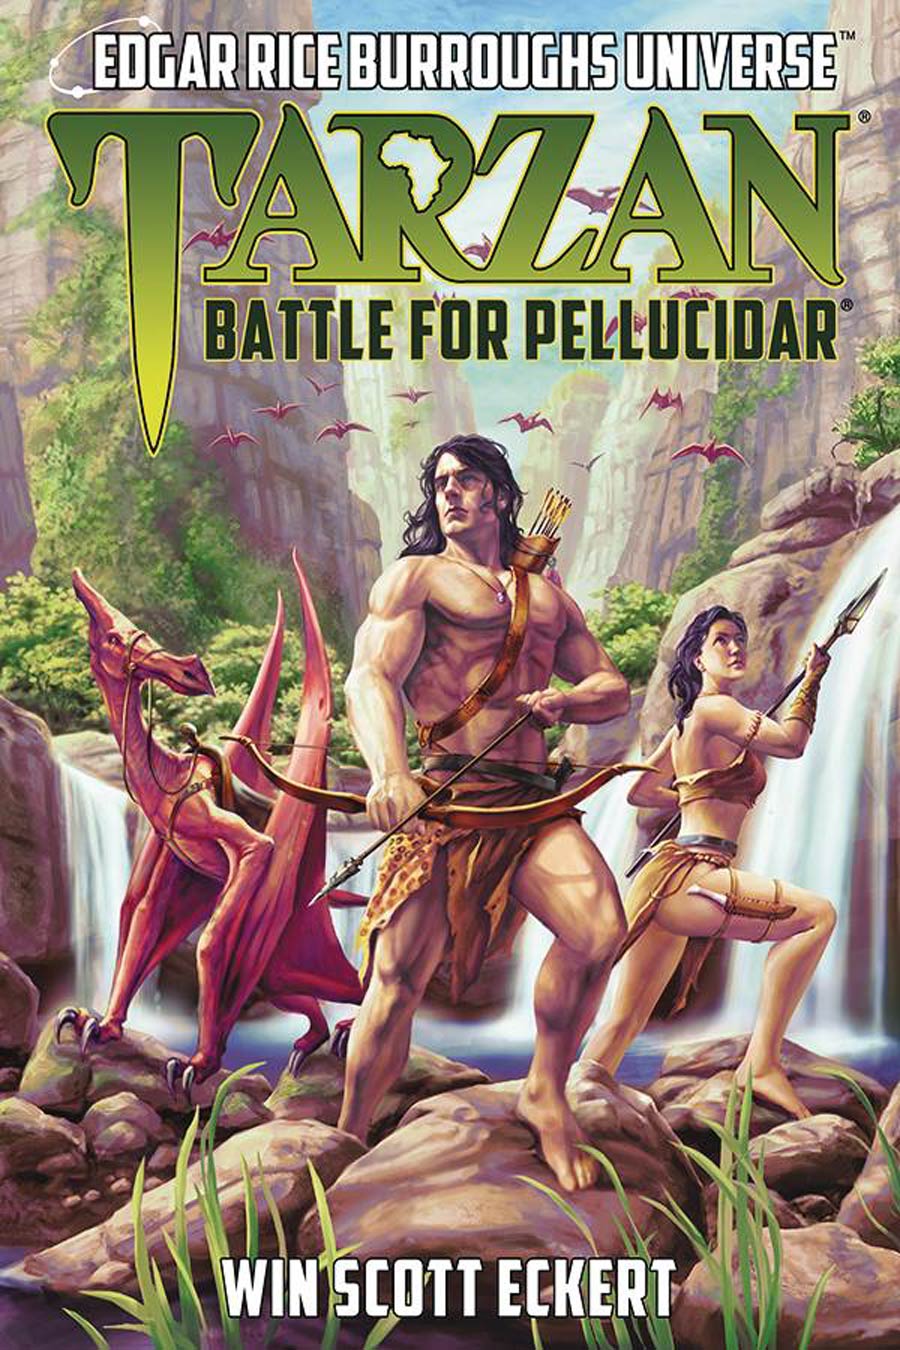 Edgar Rice Burroughs Universe Novel Vol 2 Tarzan Battle For Pellucidar HC